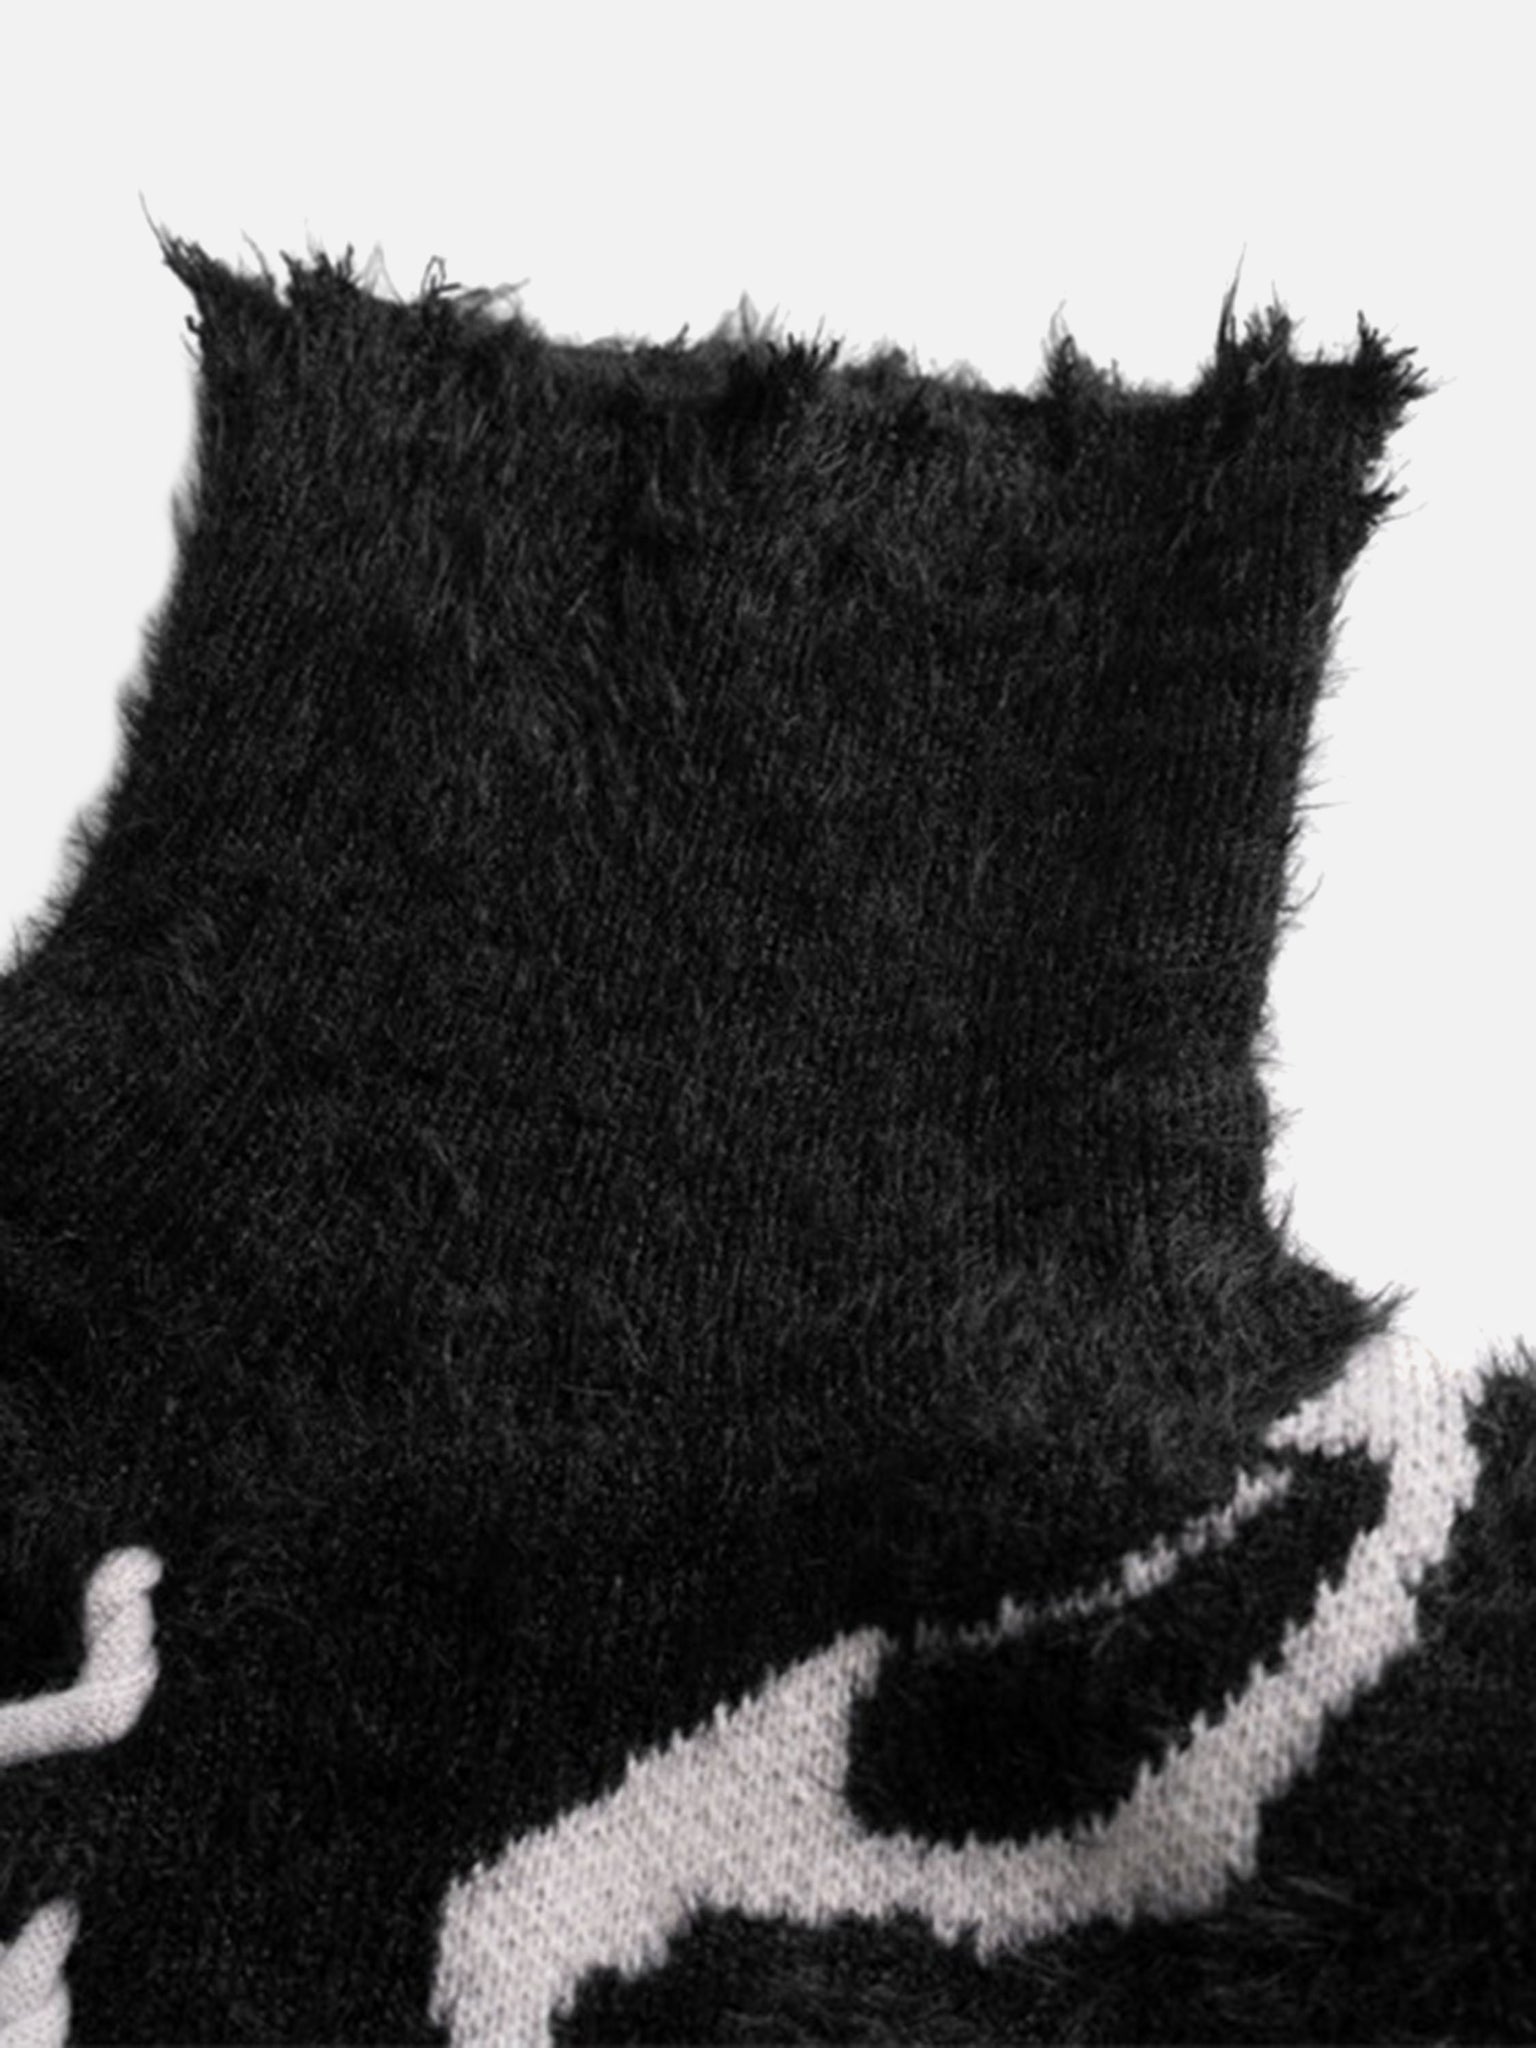 The Supermade Rip Damage Design Turtleneck Knitwear Sweater - 1525